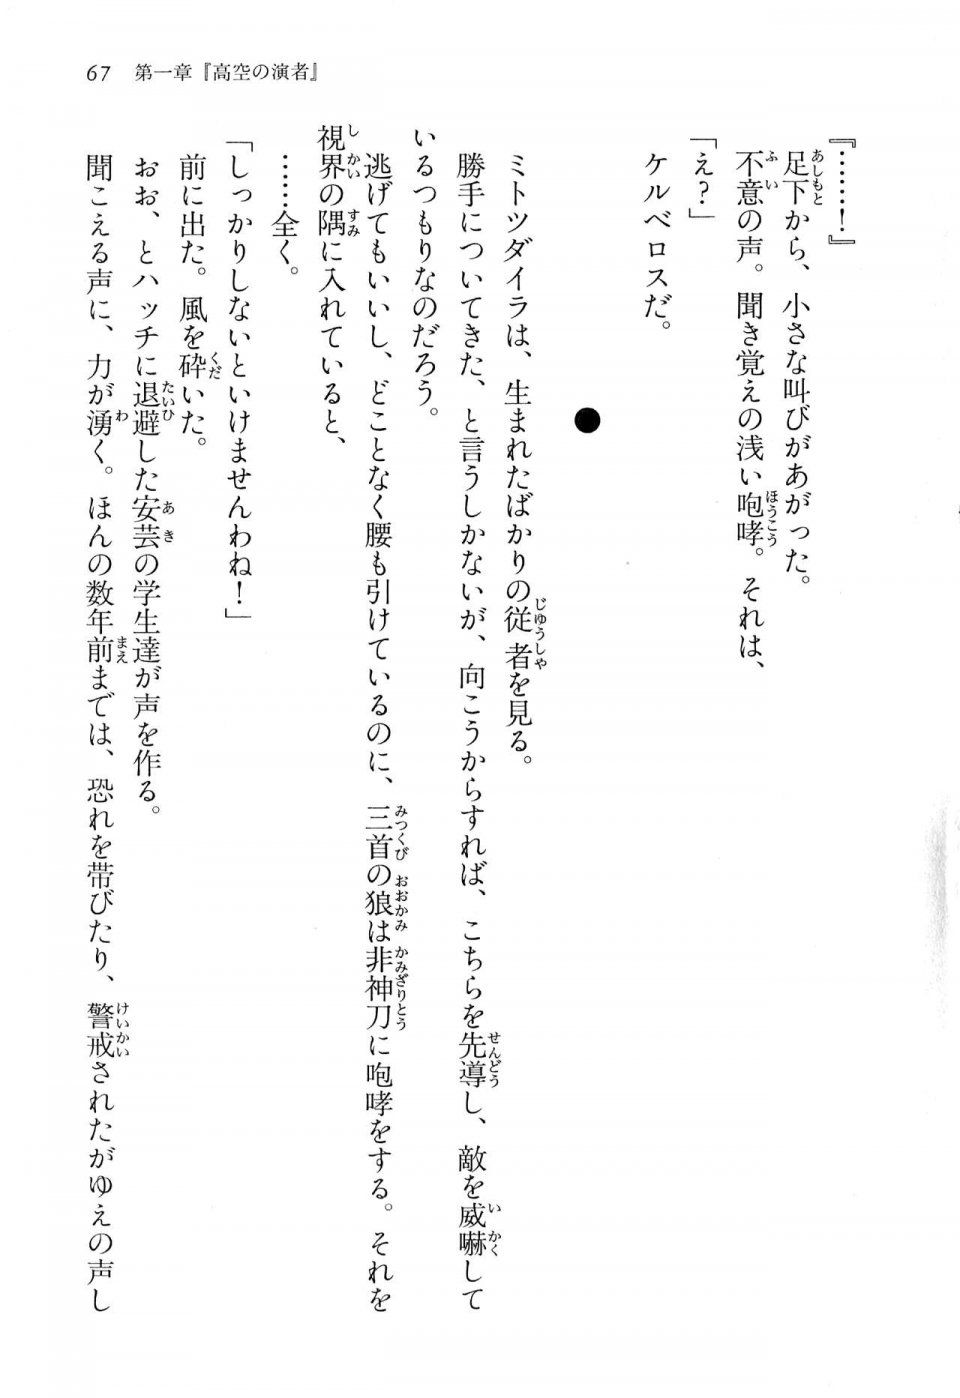 Kyoukai Senjou no Horizon BD Special Mininovel Vol 1(1A) - Photo #71